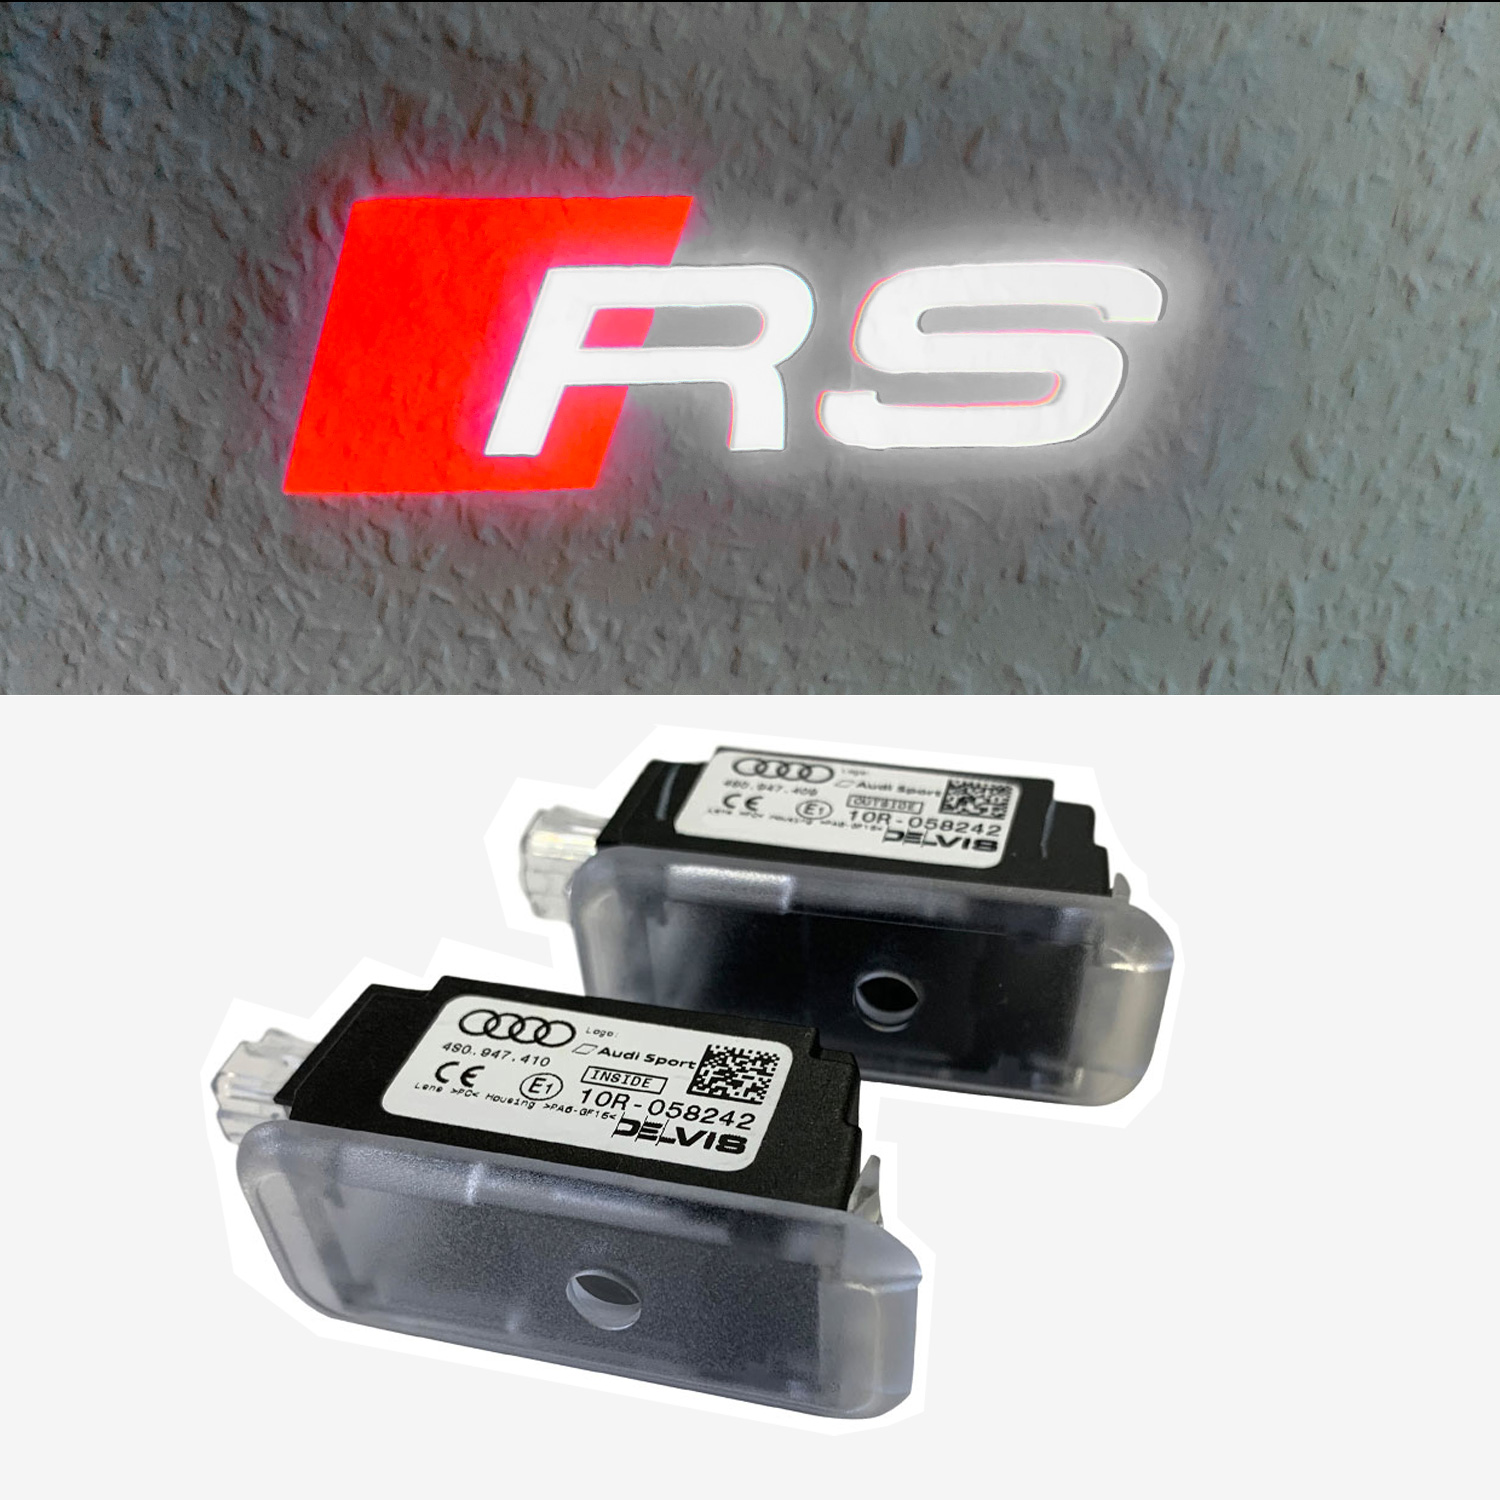 2x Original Audi Rs LED Courtesy Lights Door Logo Projector for